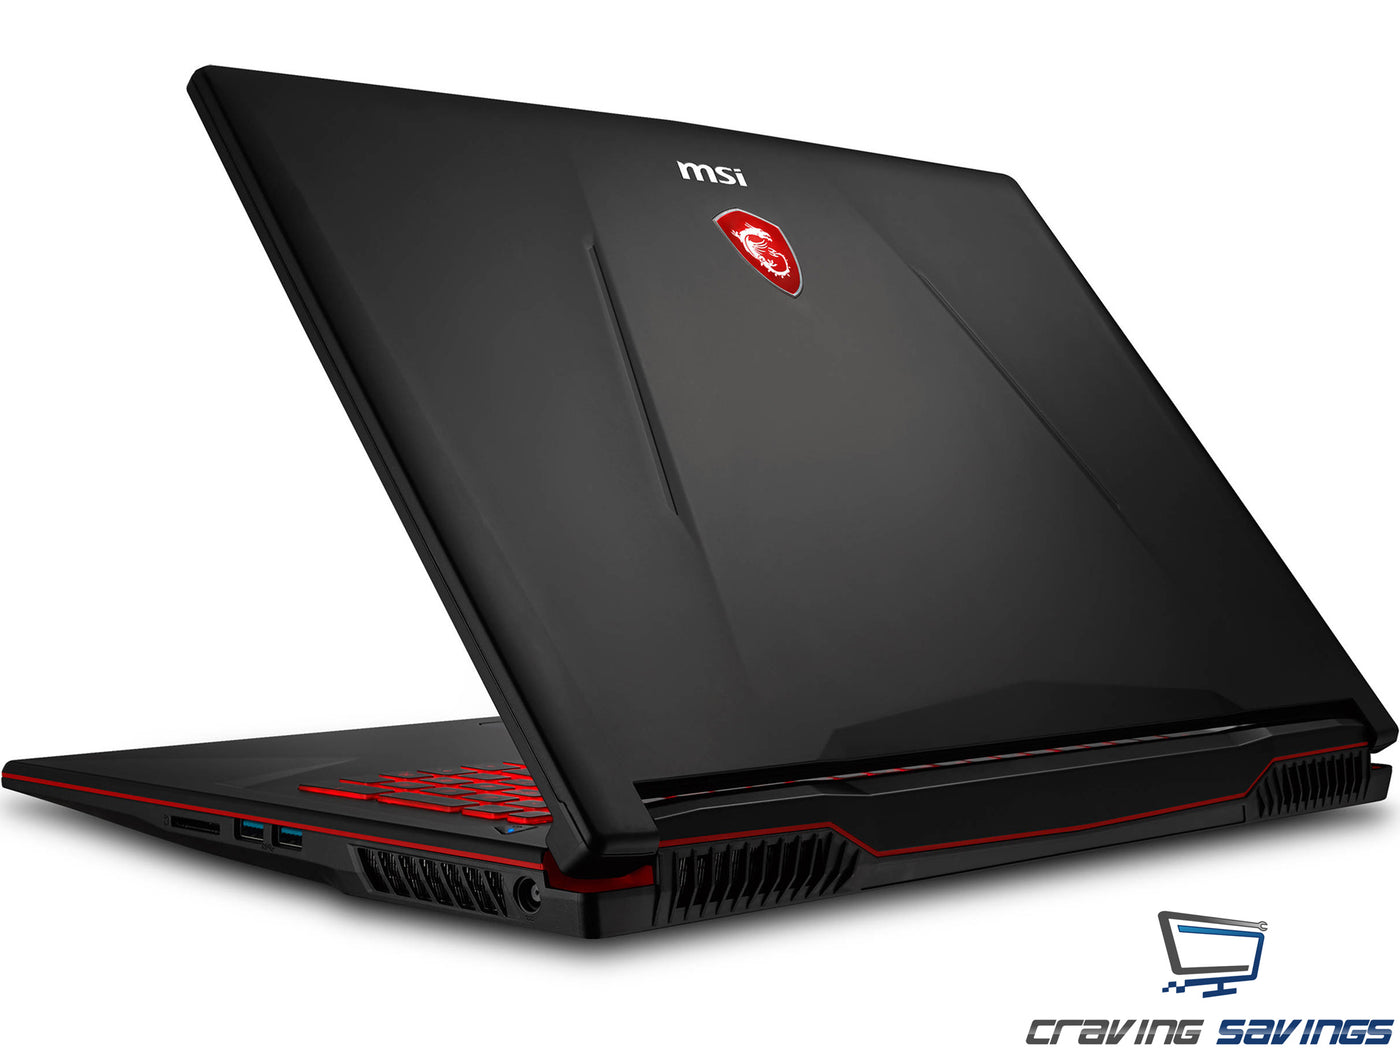 MSI GL63 Gaming Laptop 15.6 Intel Core i7-8750H, NVIDIA GeForce GTX 1050,  8gb RAM, 256gb SSD + 1TB HDD 